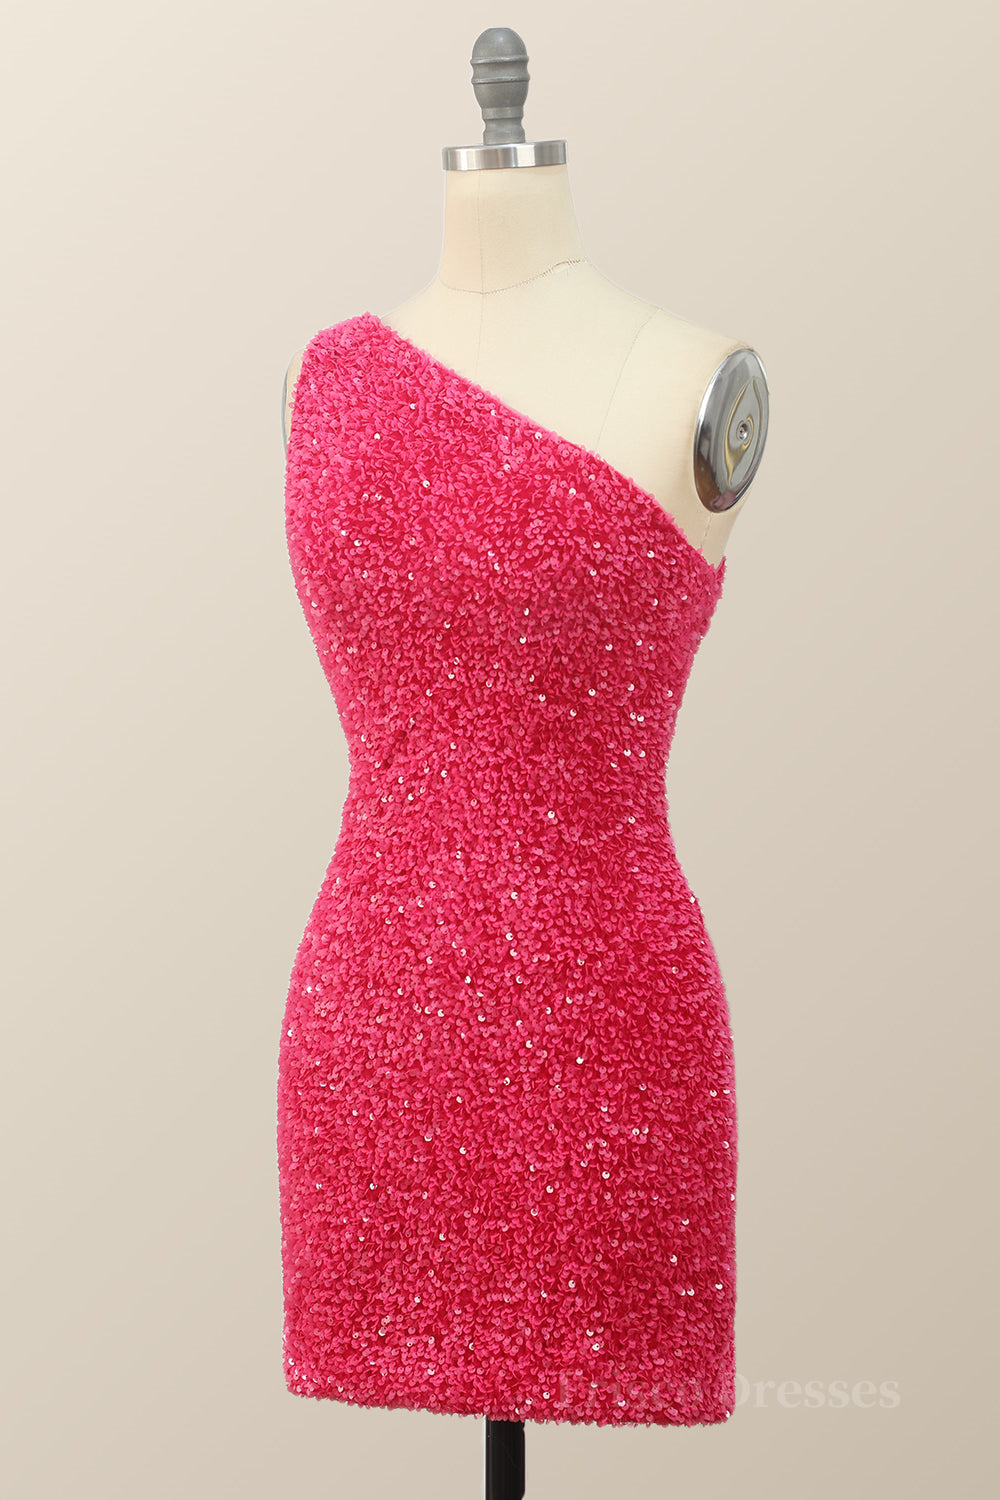 Sparkle One Shoulder Hot Pink Sequin Party Dress